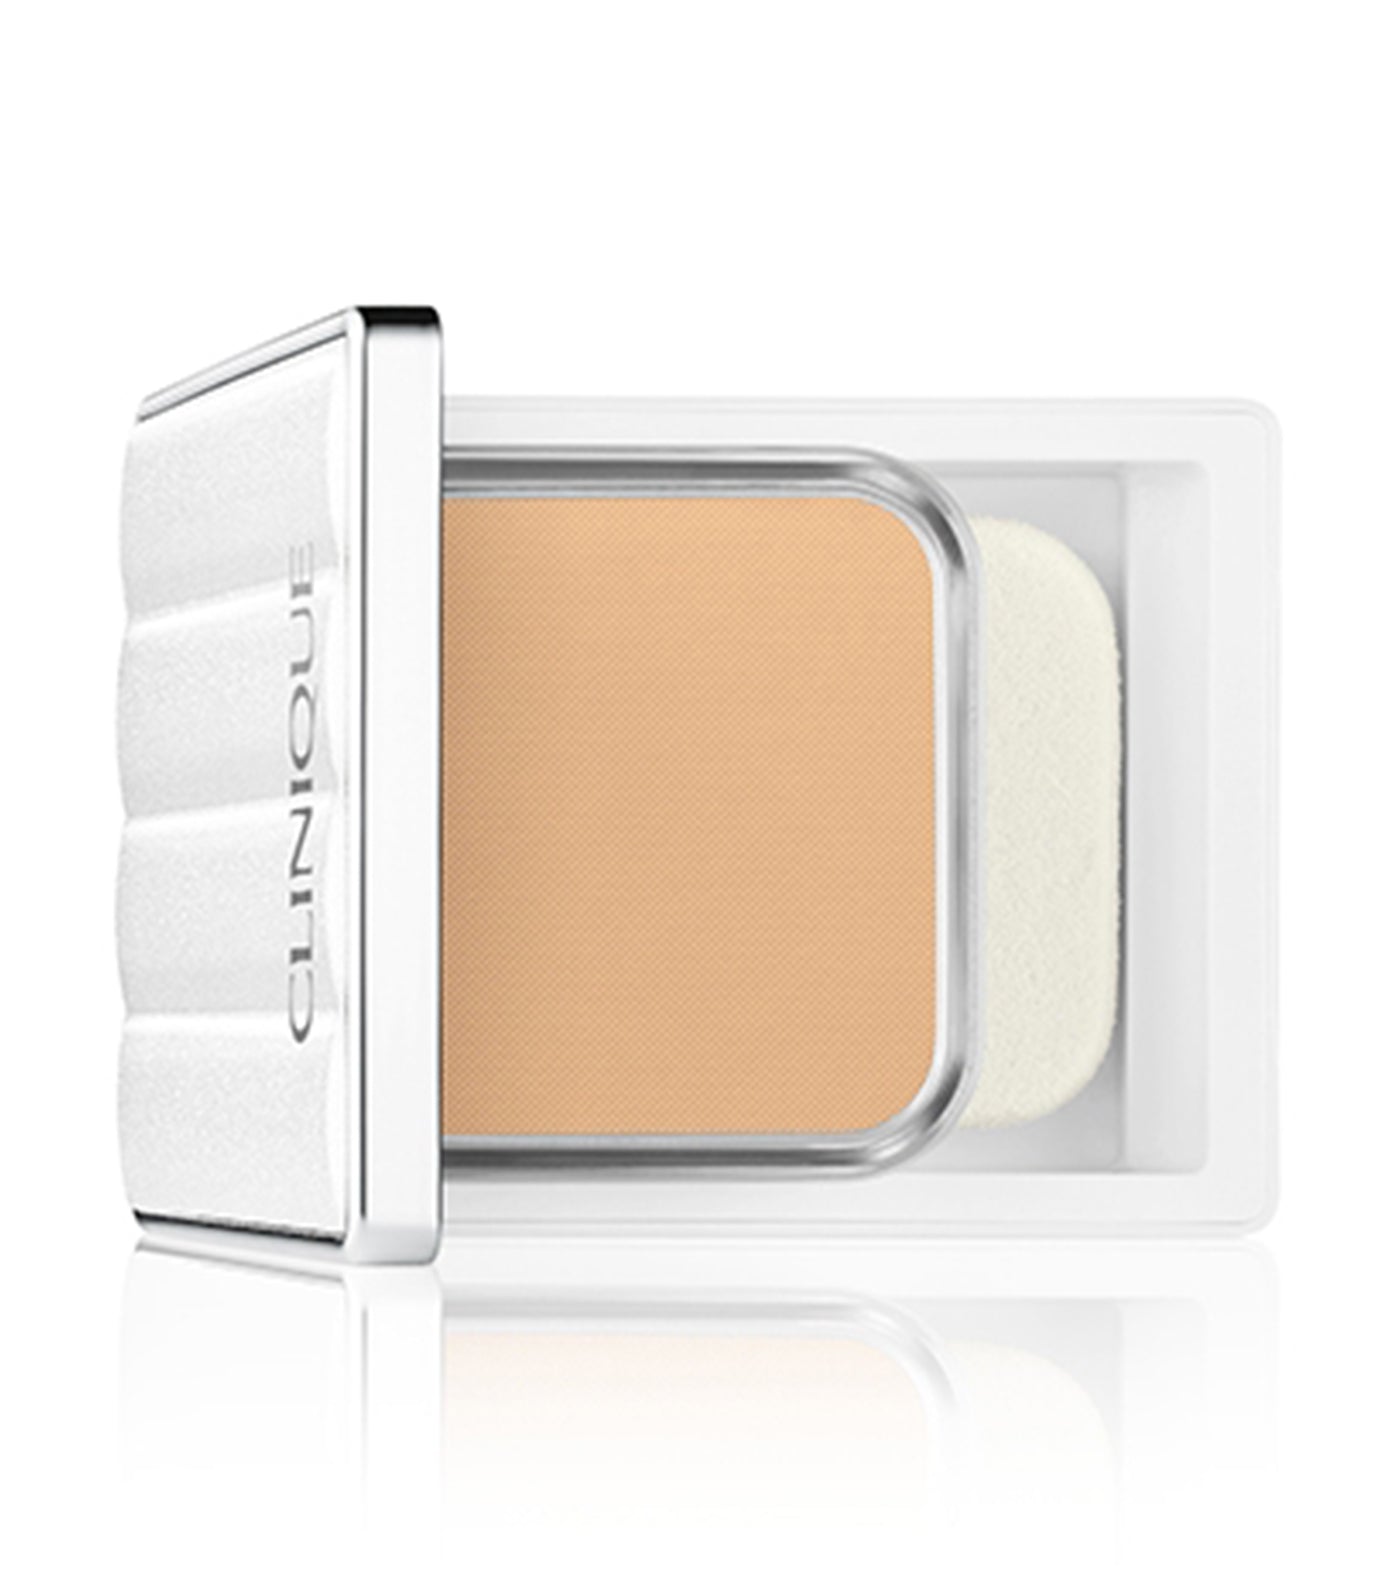 clinique neutral even better compact makeup broad spectrum spf 15